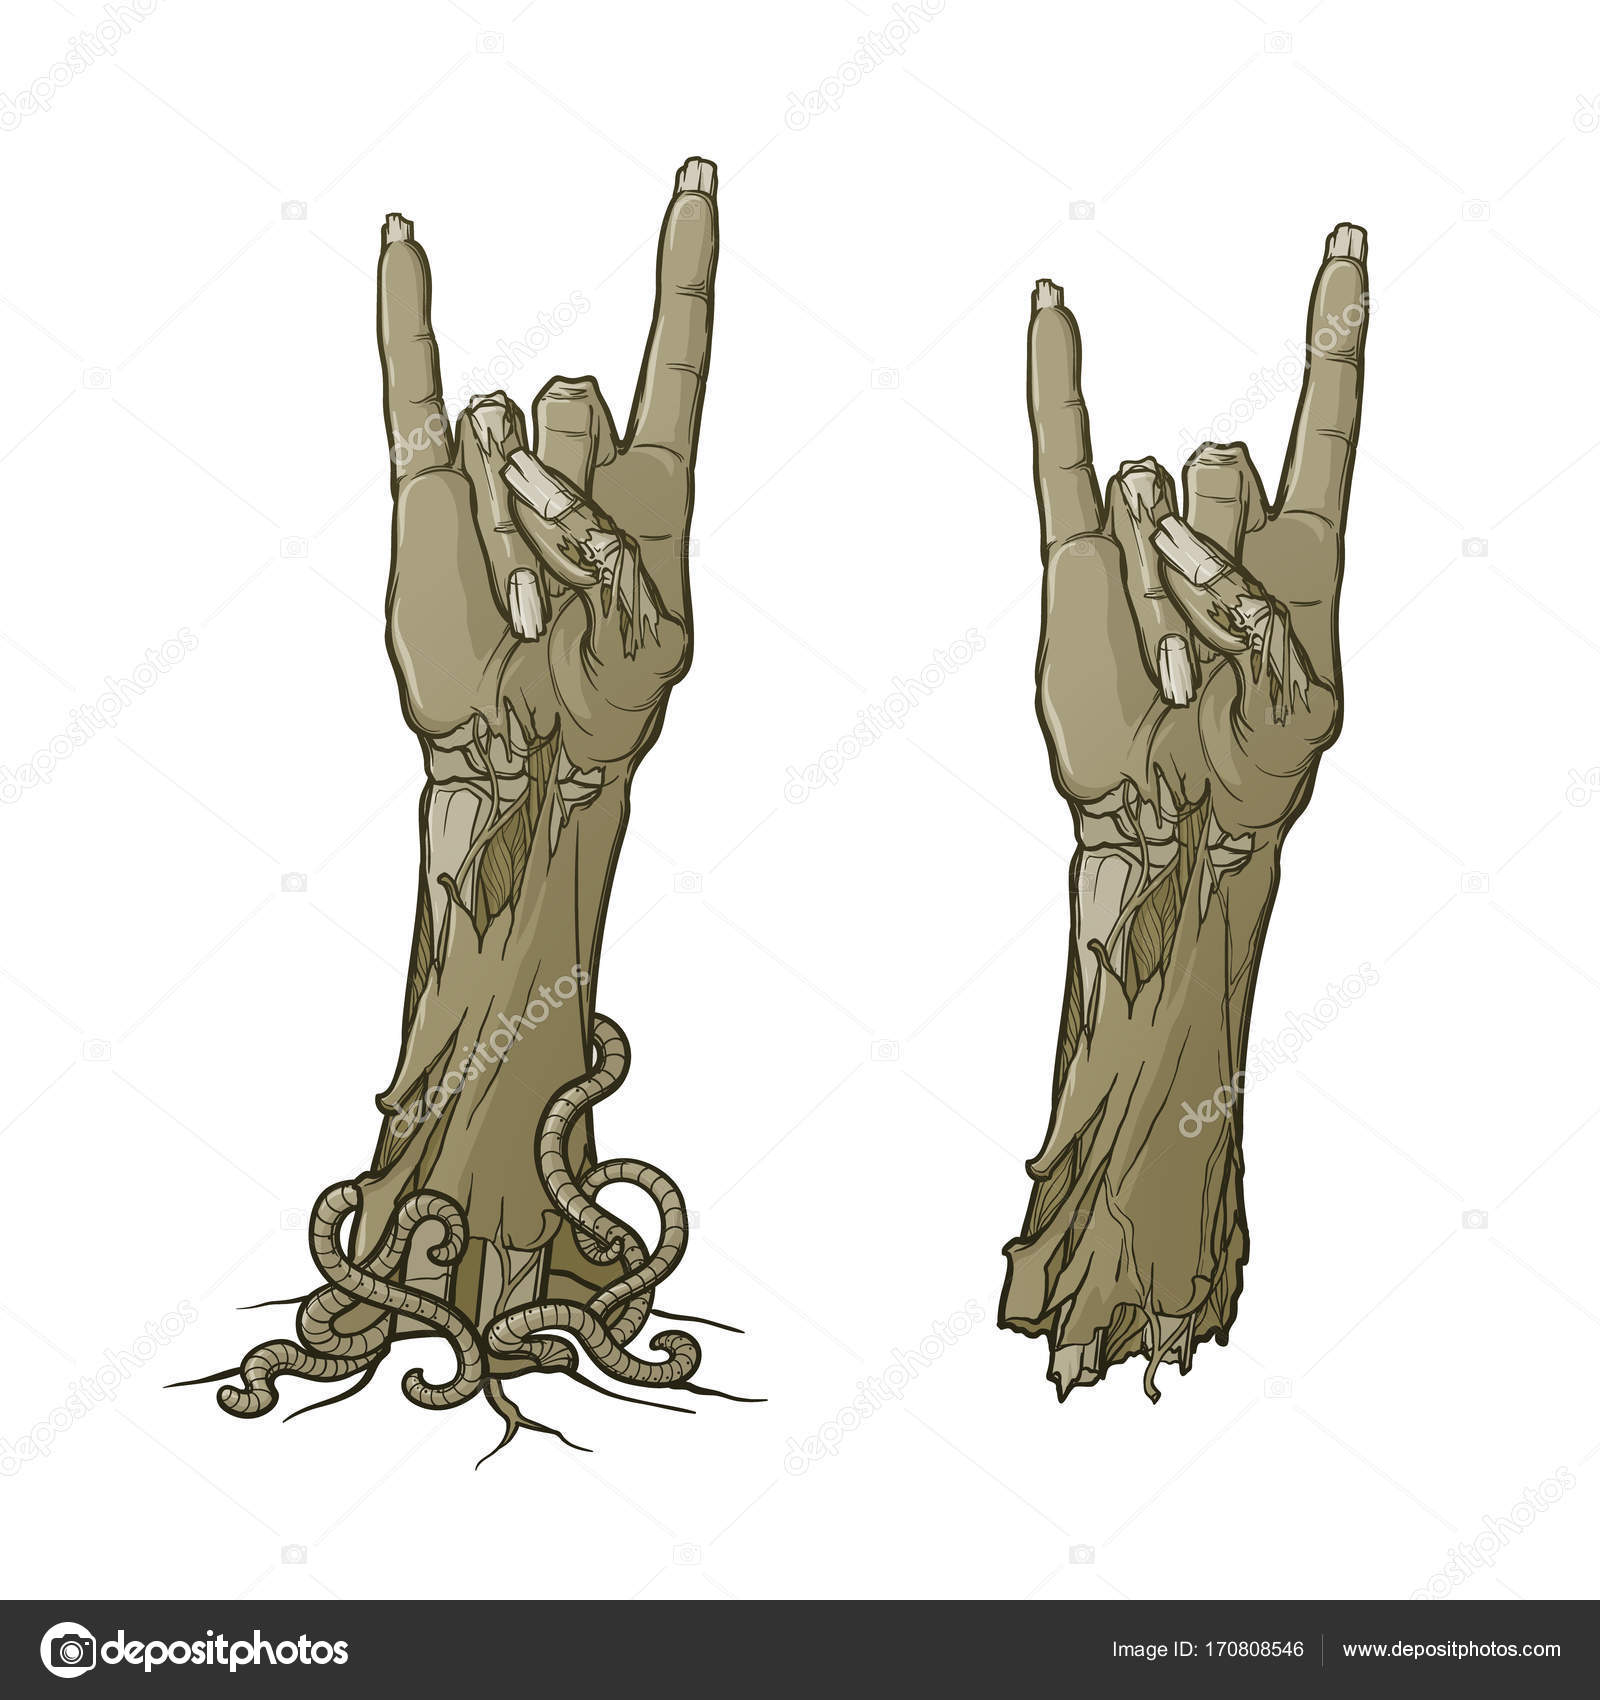 depositphotos 170808546 stock illustration zombie body language sign of